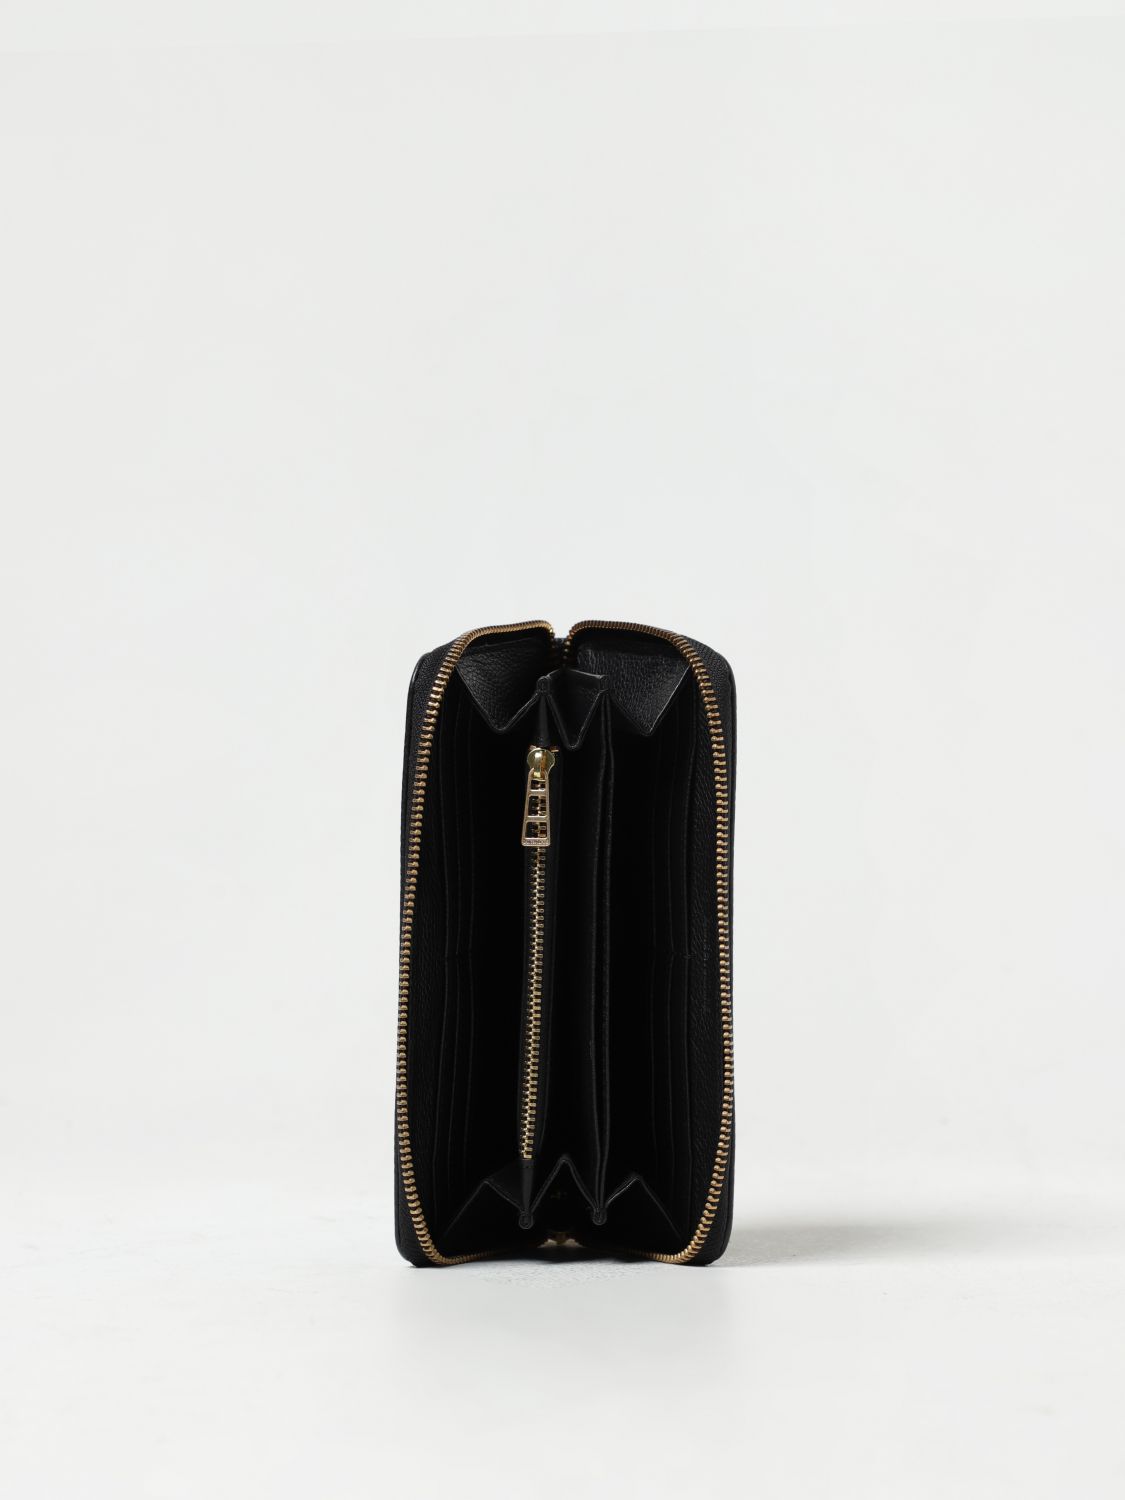 Zadig & Voltaire Womens Noir Matelasse Leather Wallet 1 Size